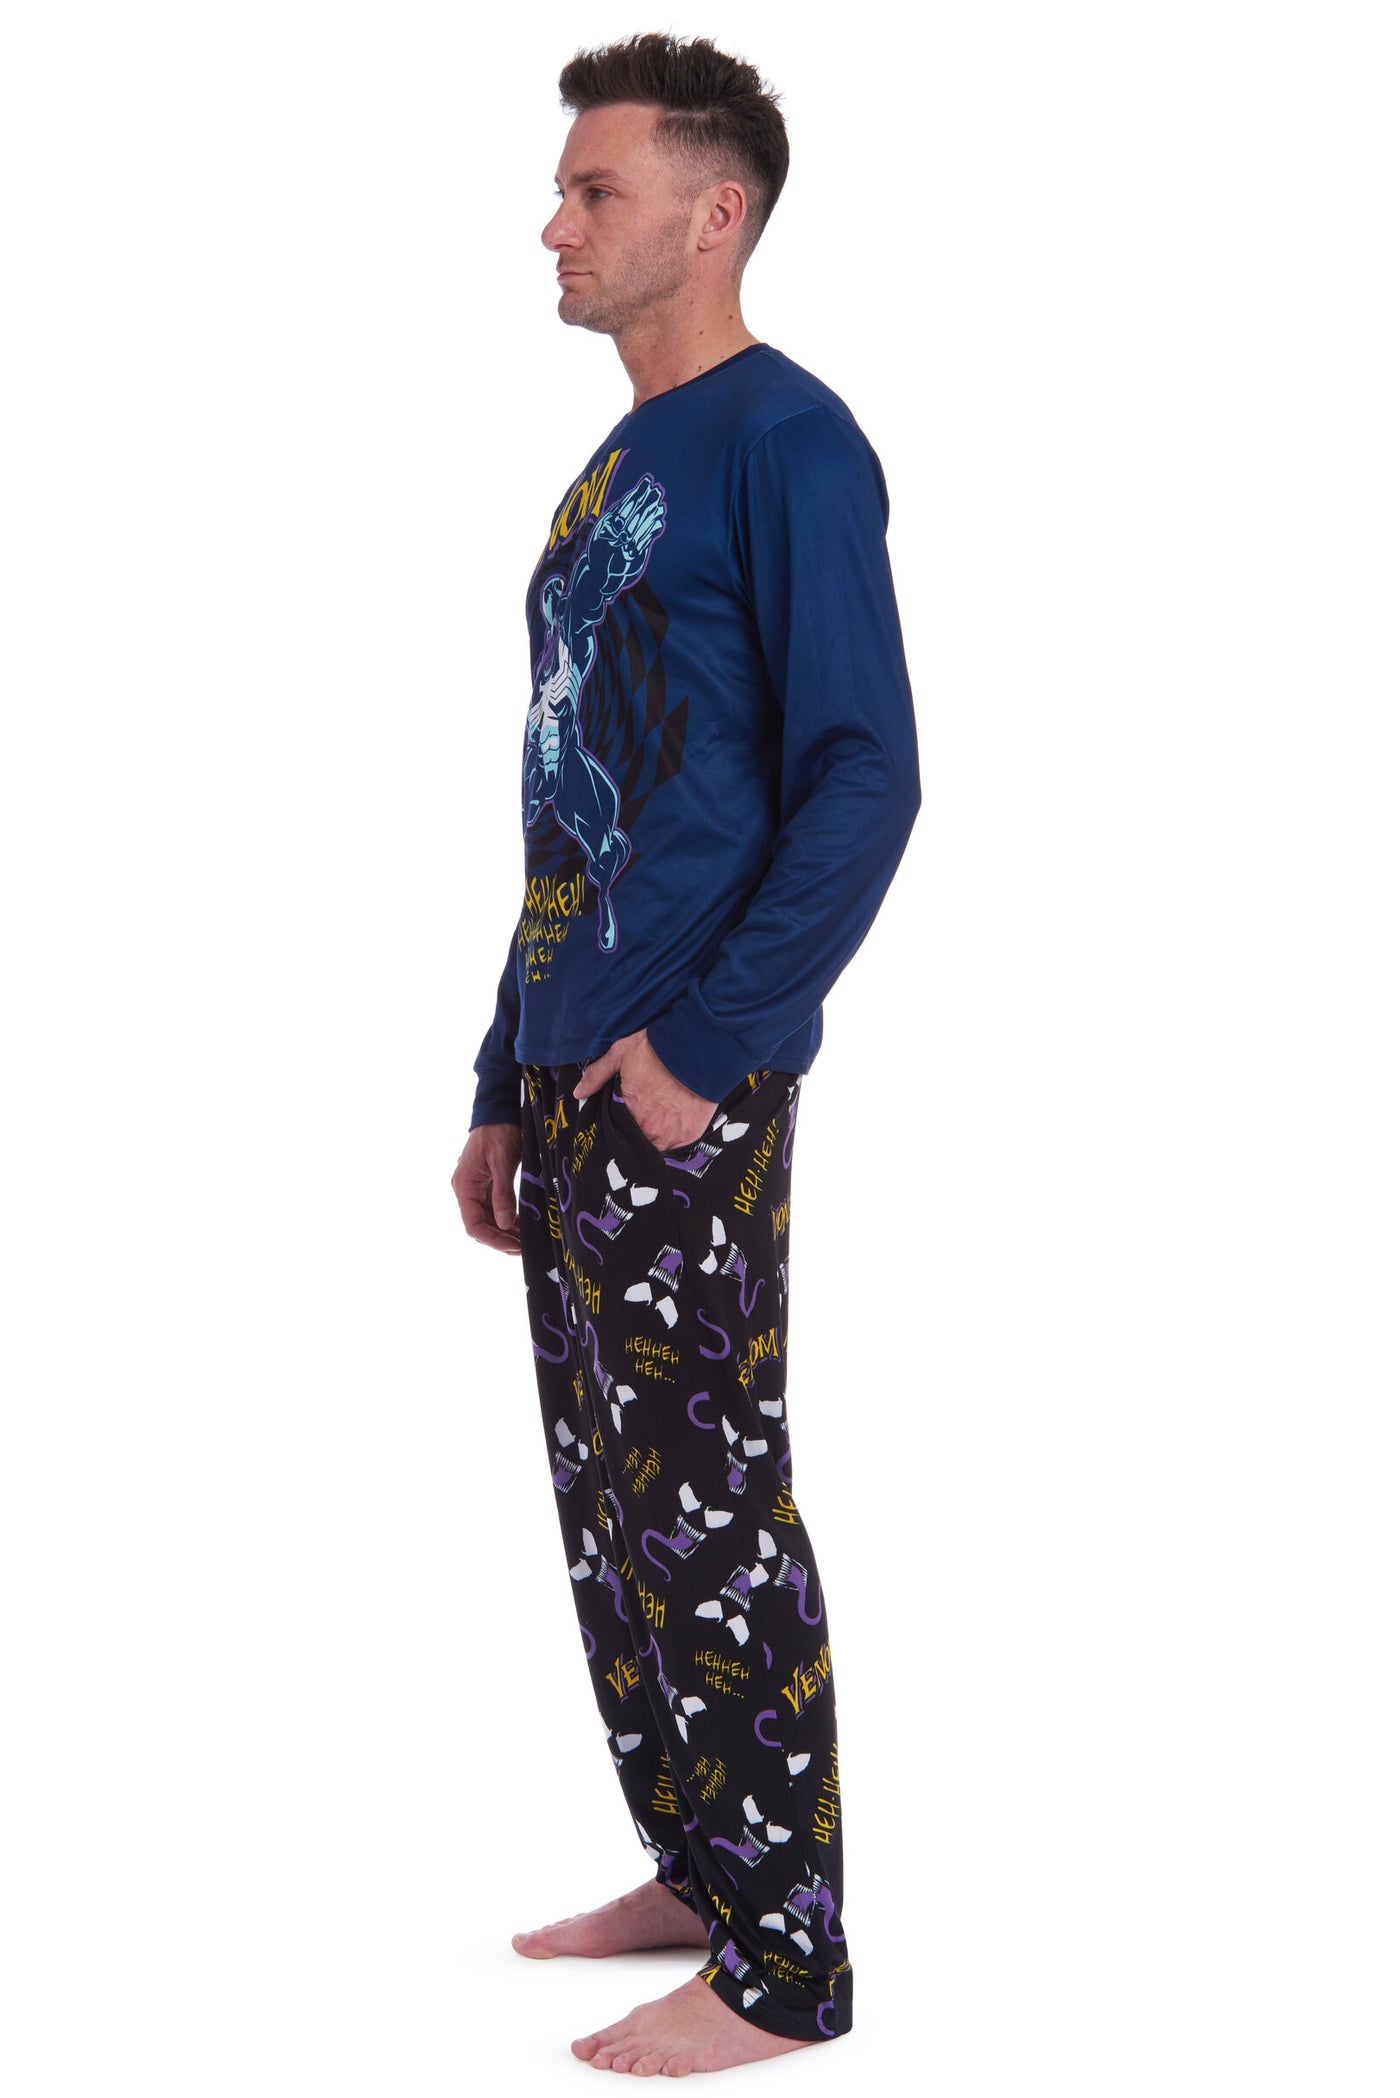 Marvel Avengers Venom Pajama Shirt and Pants Sleep Set